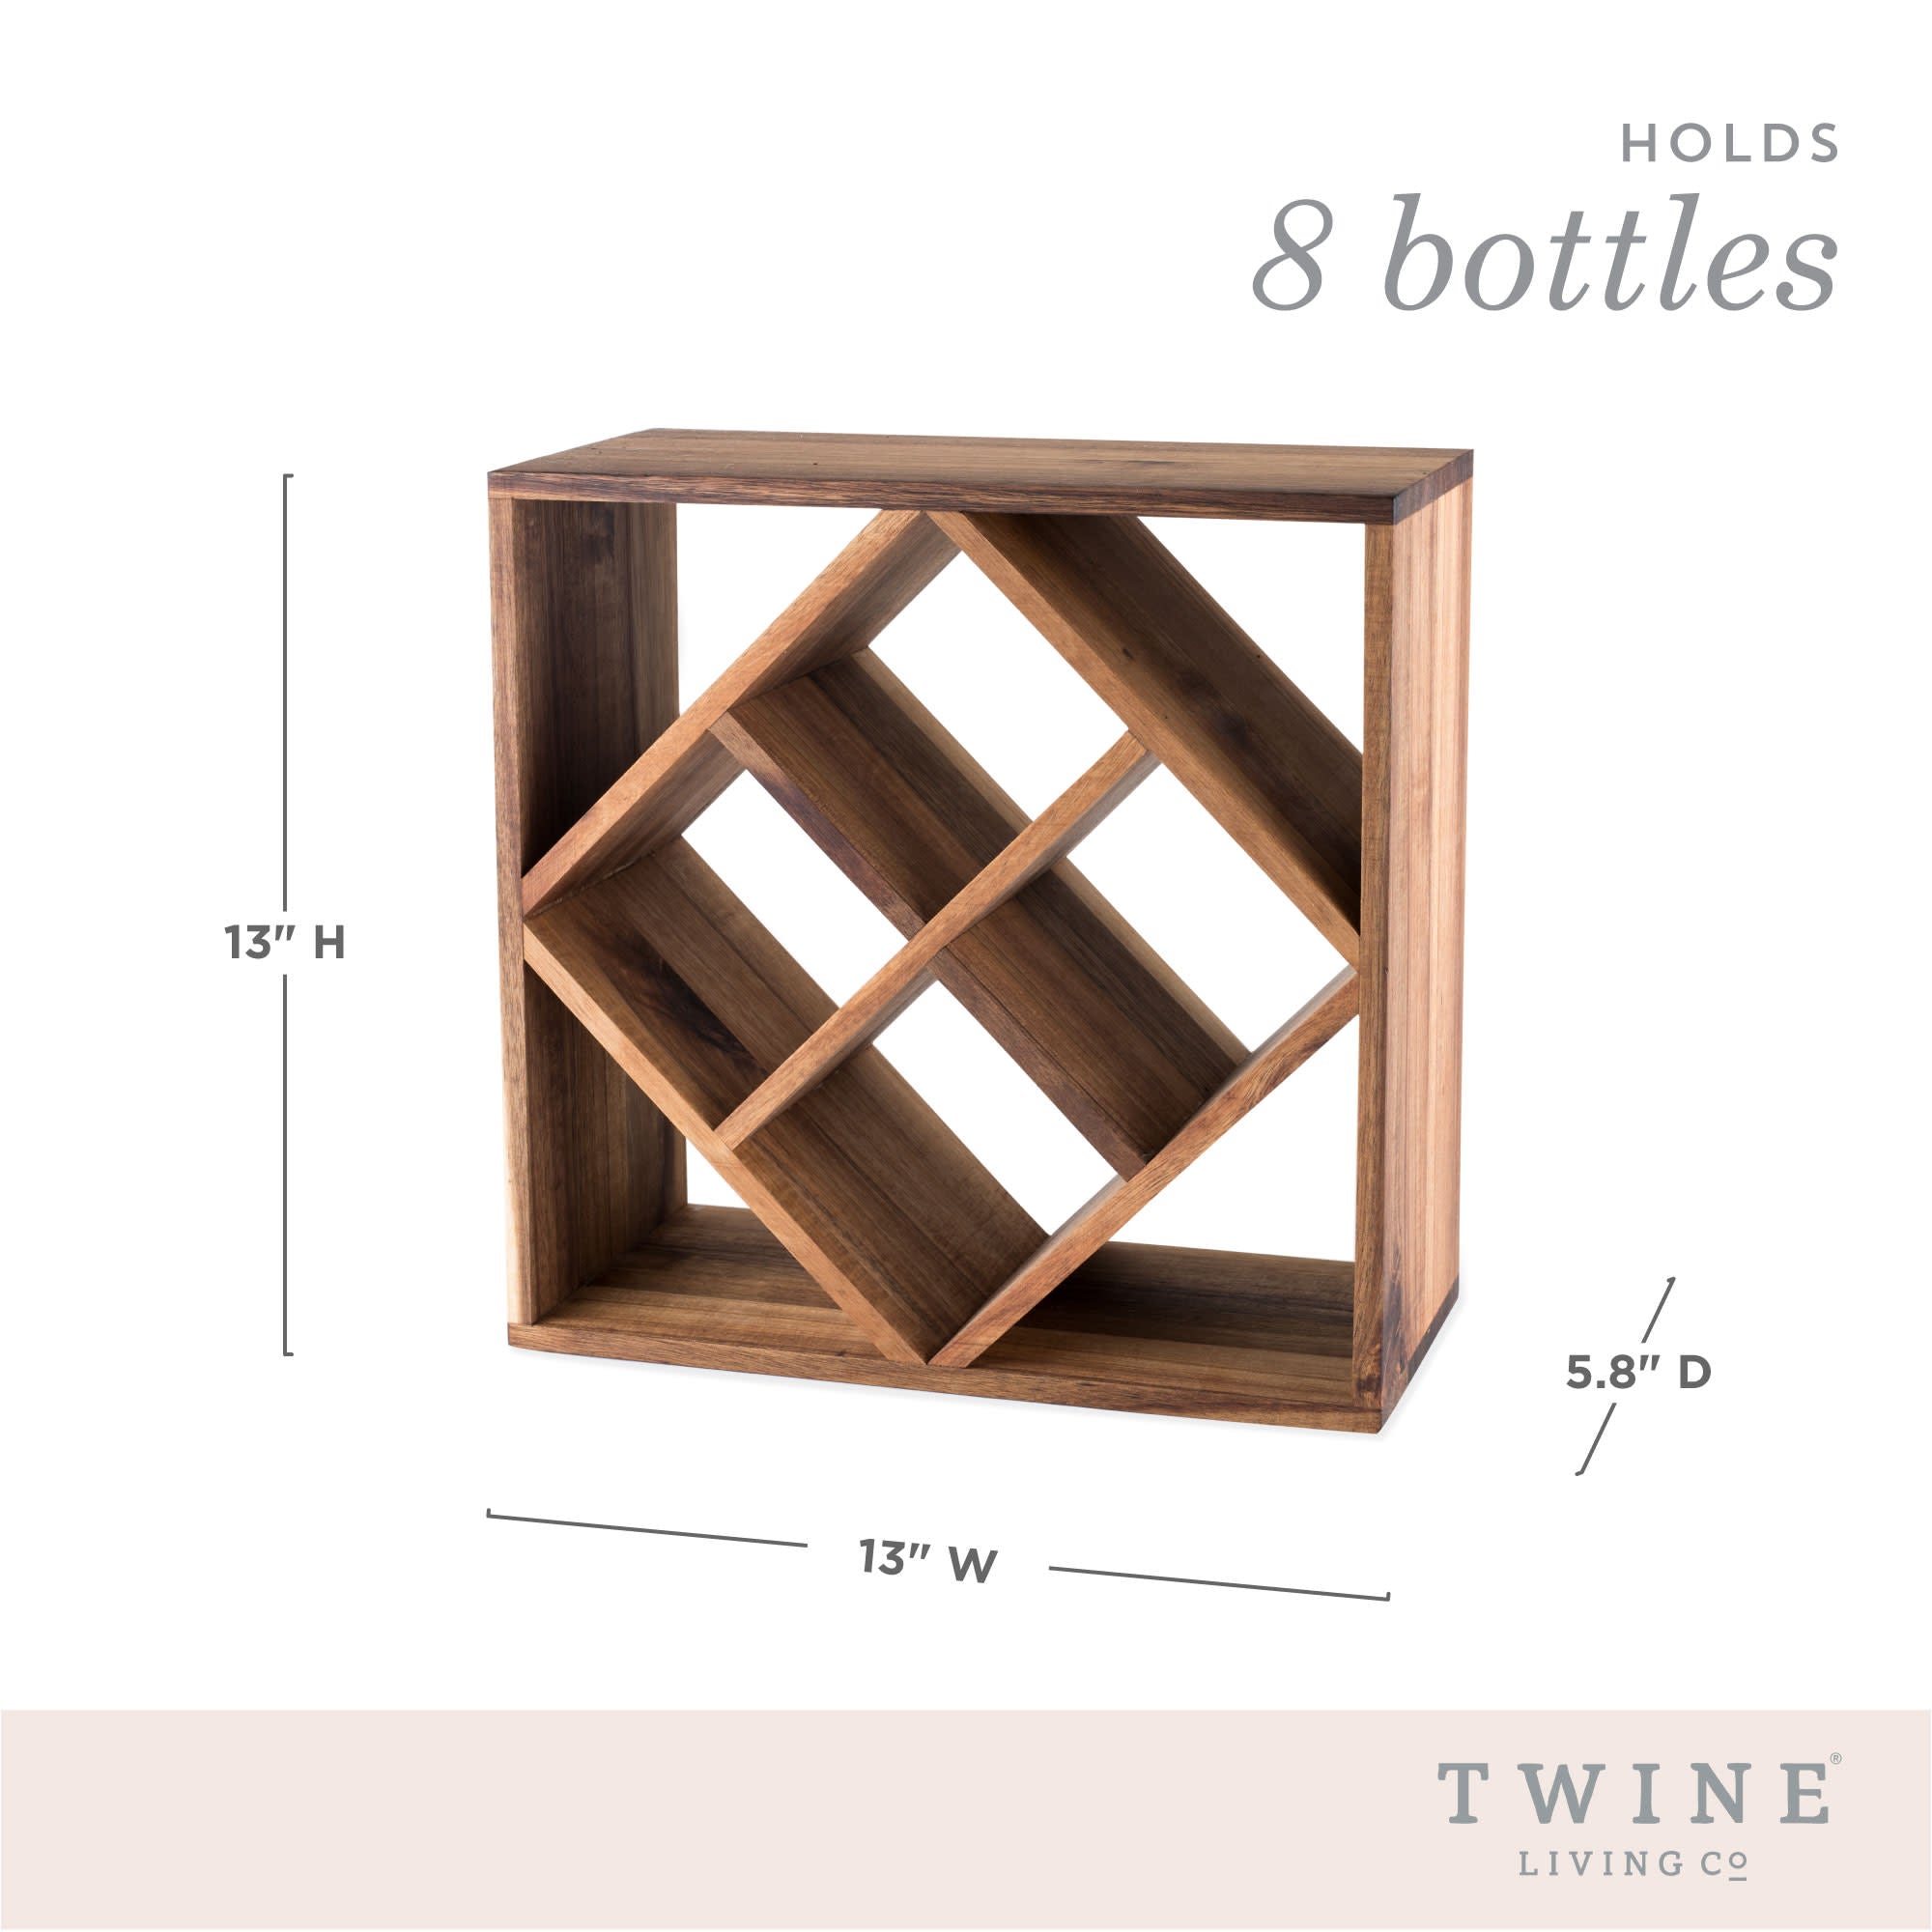 Acacia Wood Lattice Wine Rack by Twine® (5911) Wine Accessories Twine